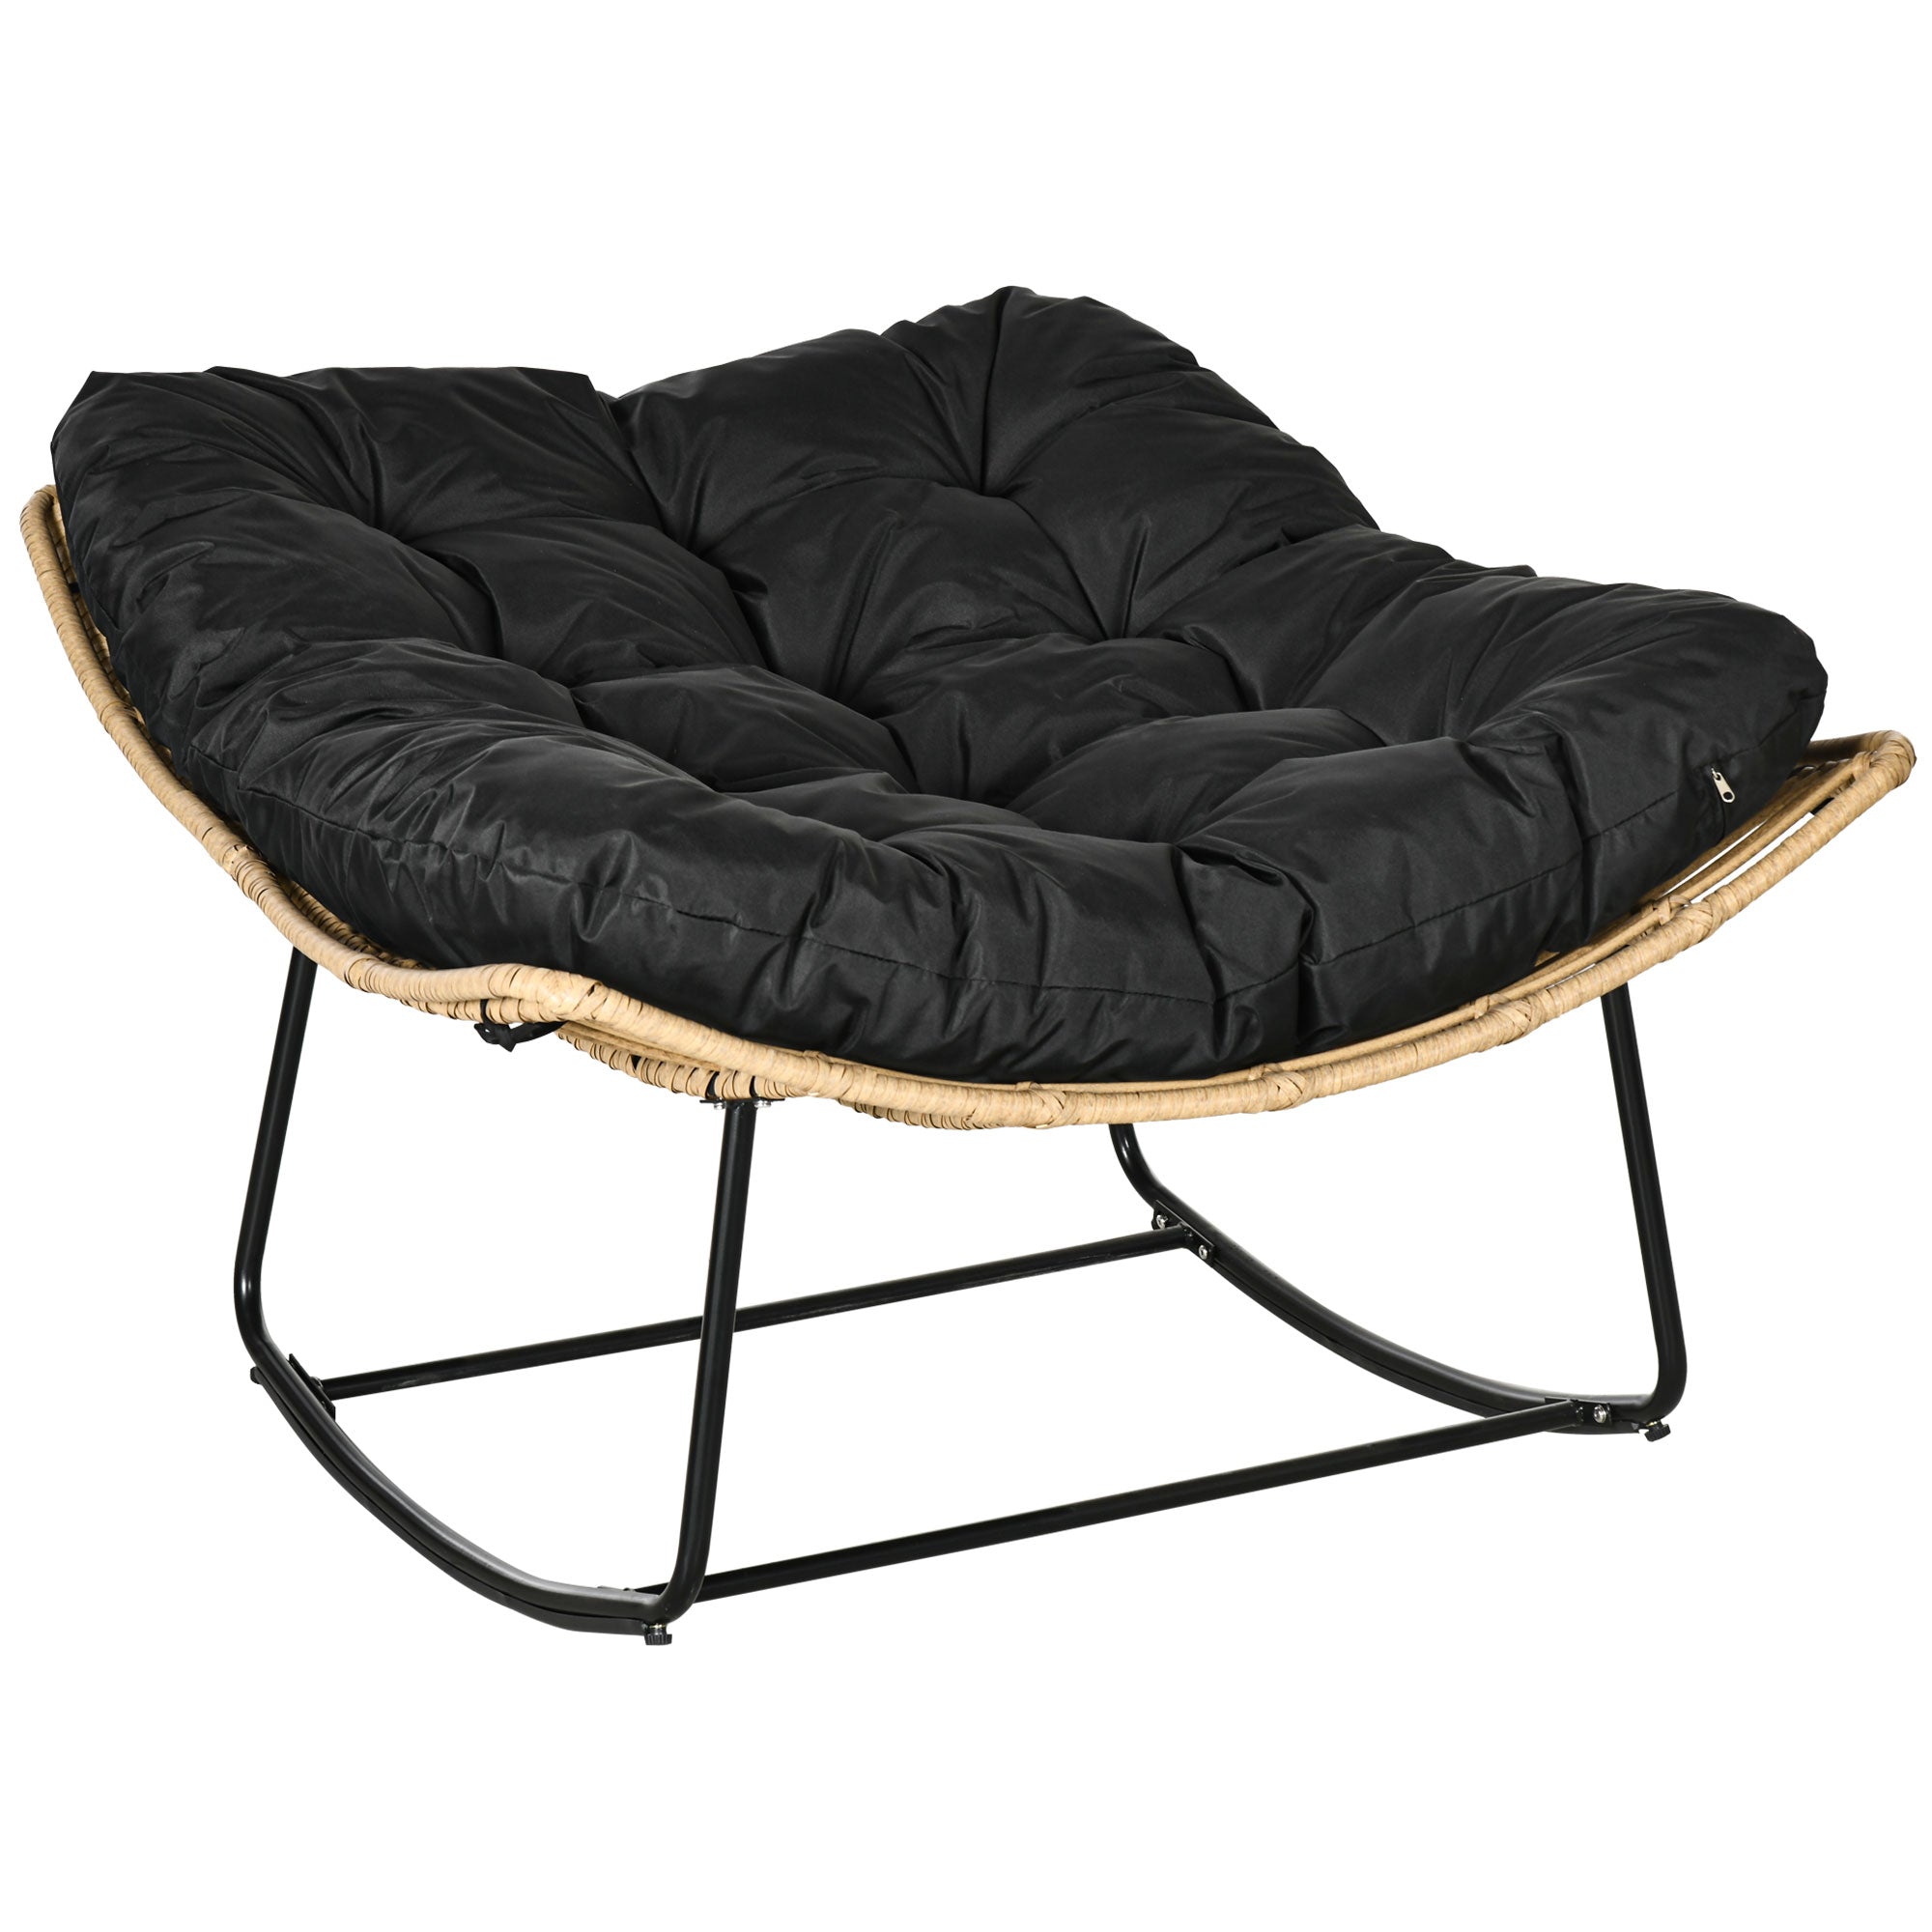 Outdoor PE Rattan Rocking Chair, Patio Luxury Round Wicker Garden Porch Furniture w/ Thick Cushion, Natural Wood Finish-0